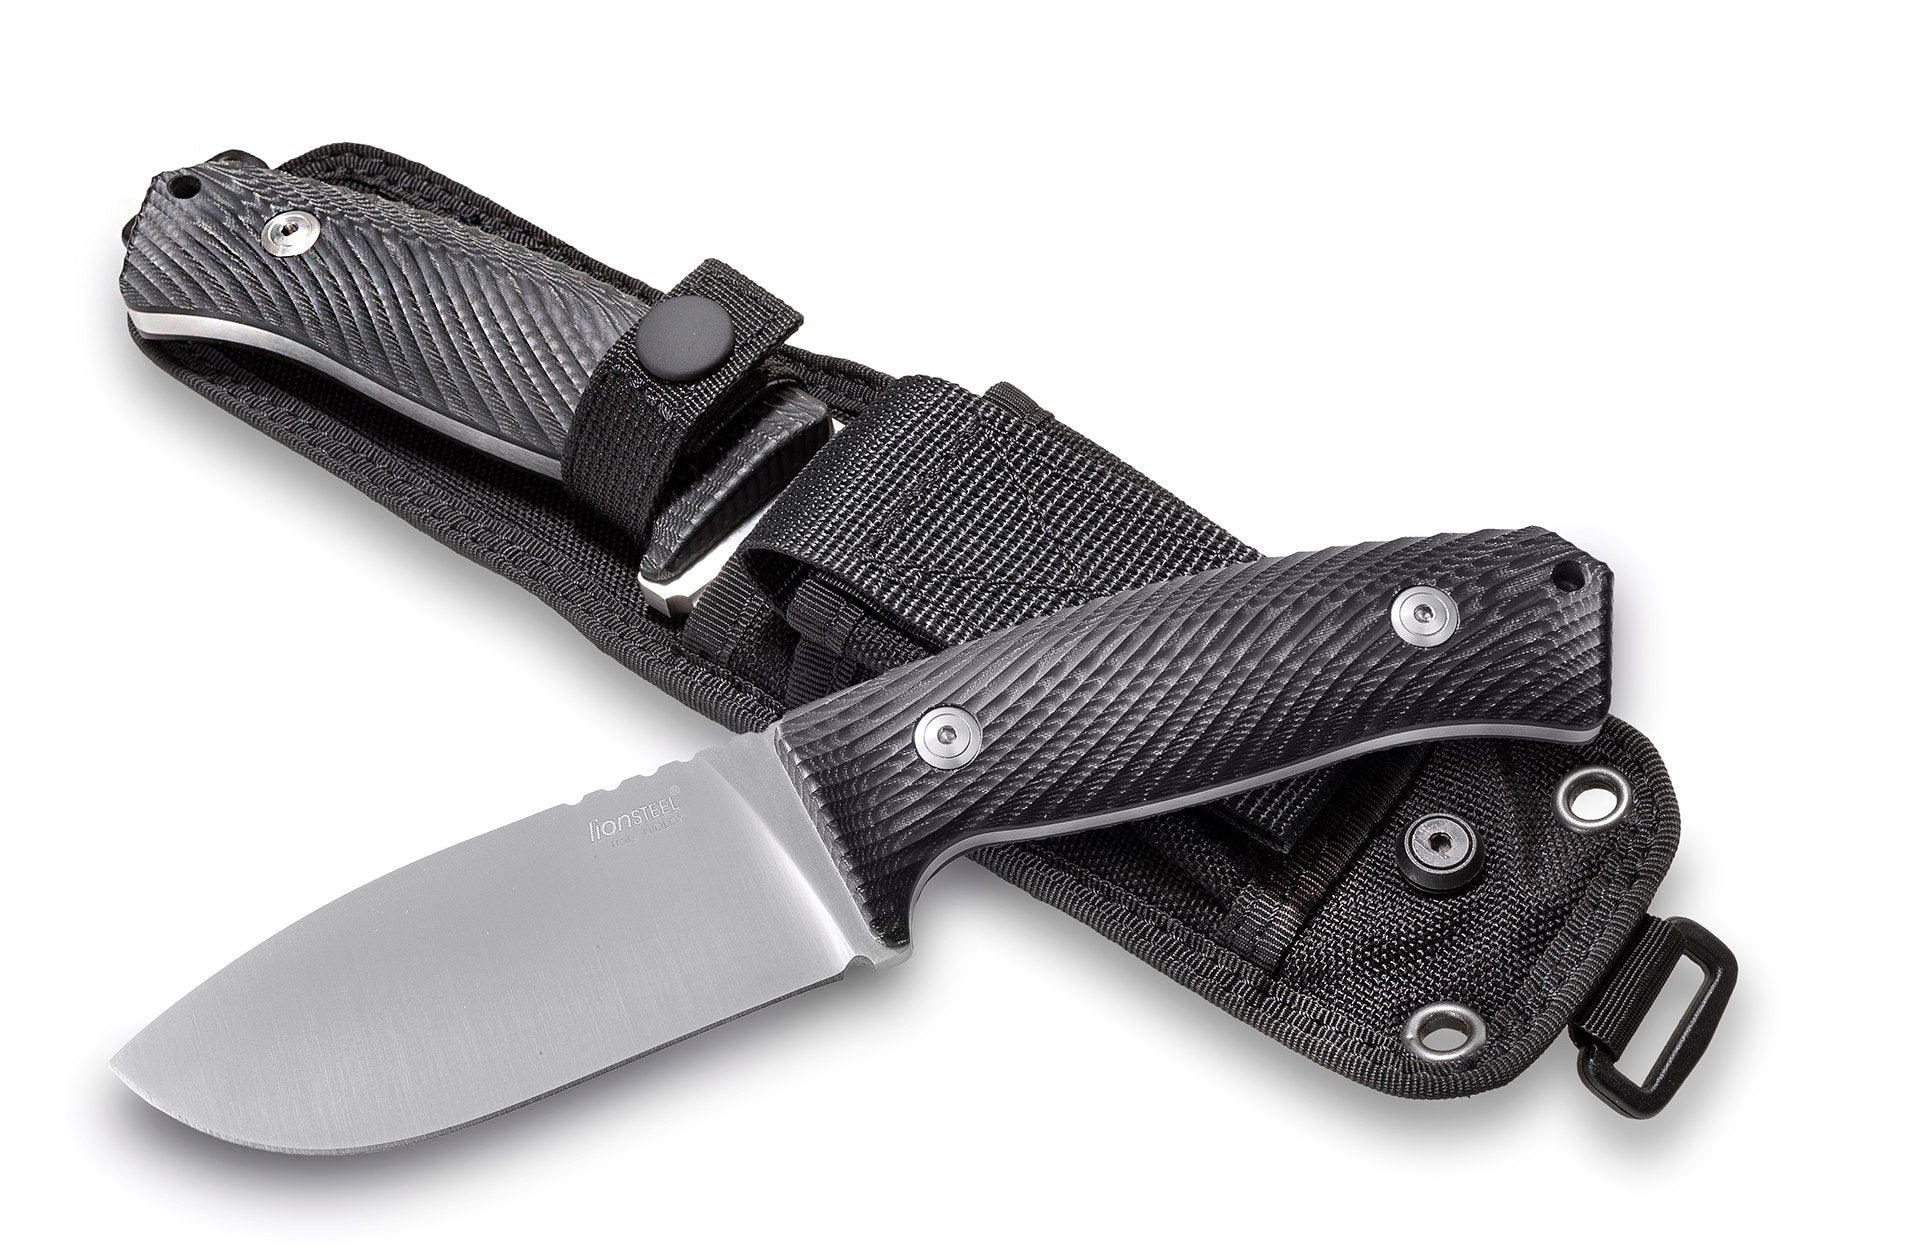 M3 MI - Hunting fix knife with NIOLOX blade Micarta handle, cordura sheath